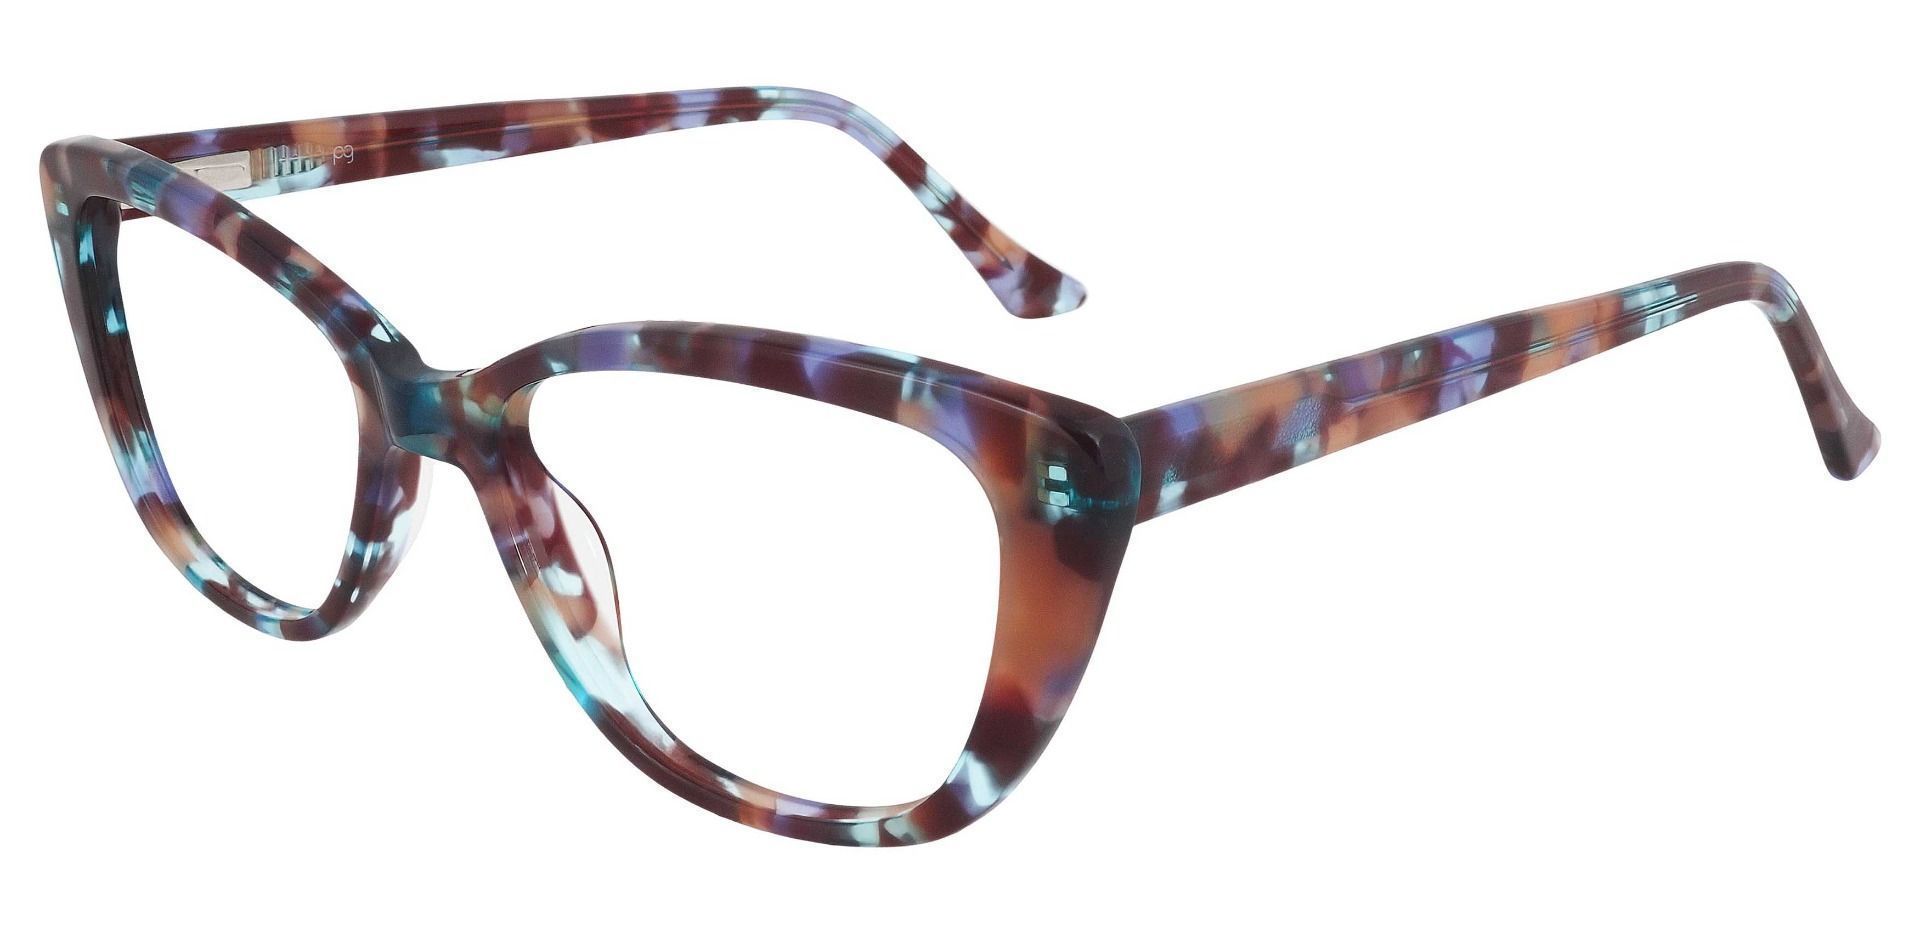 Athena Cat-Eye Progressive Glasses - Floral